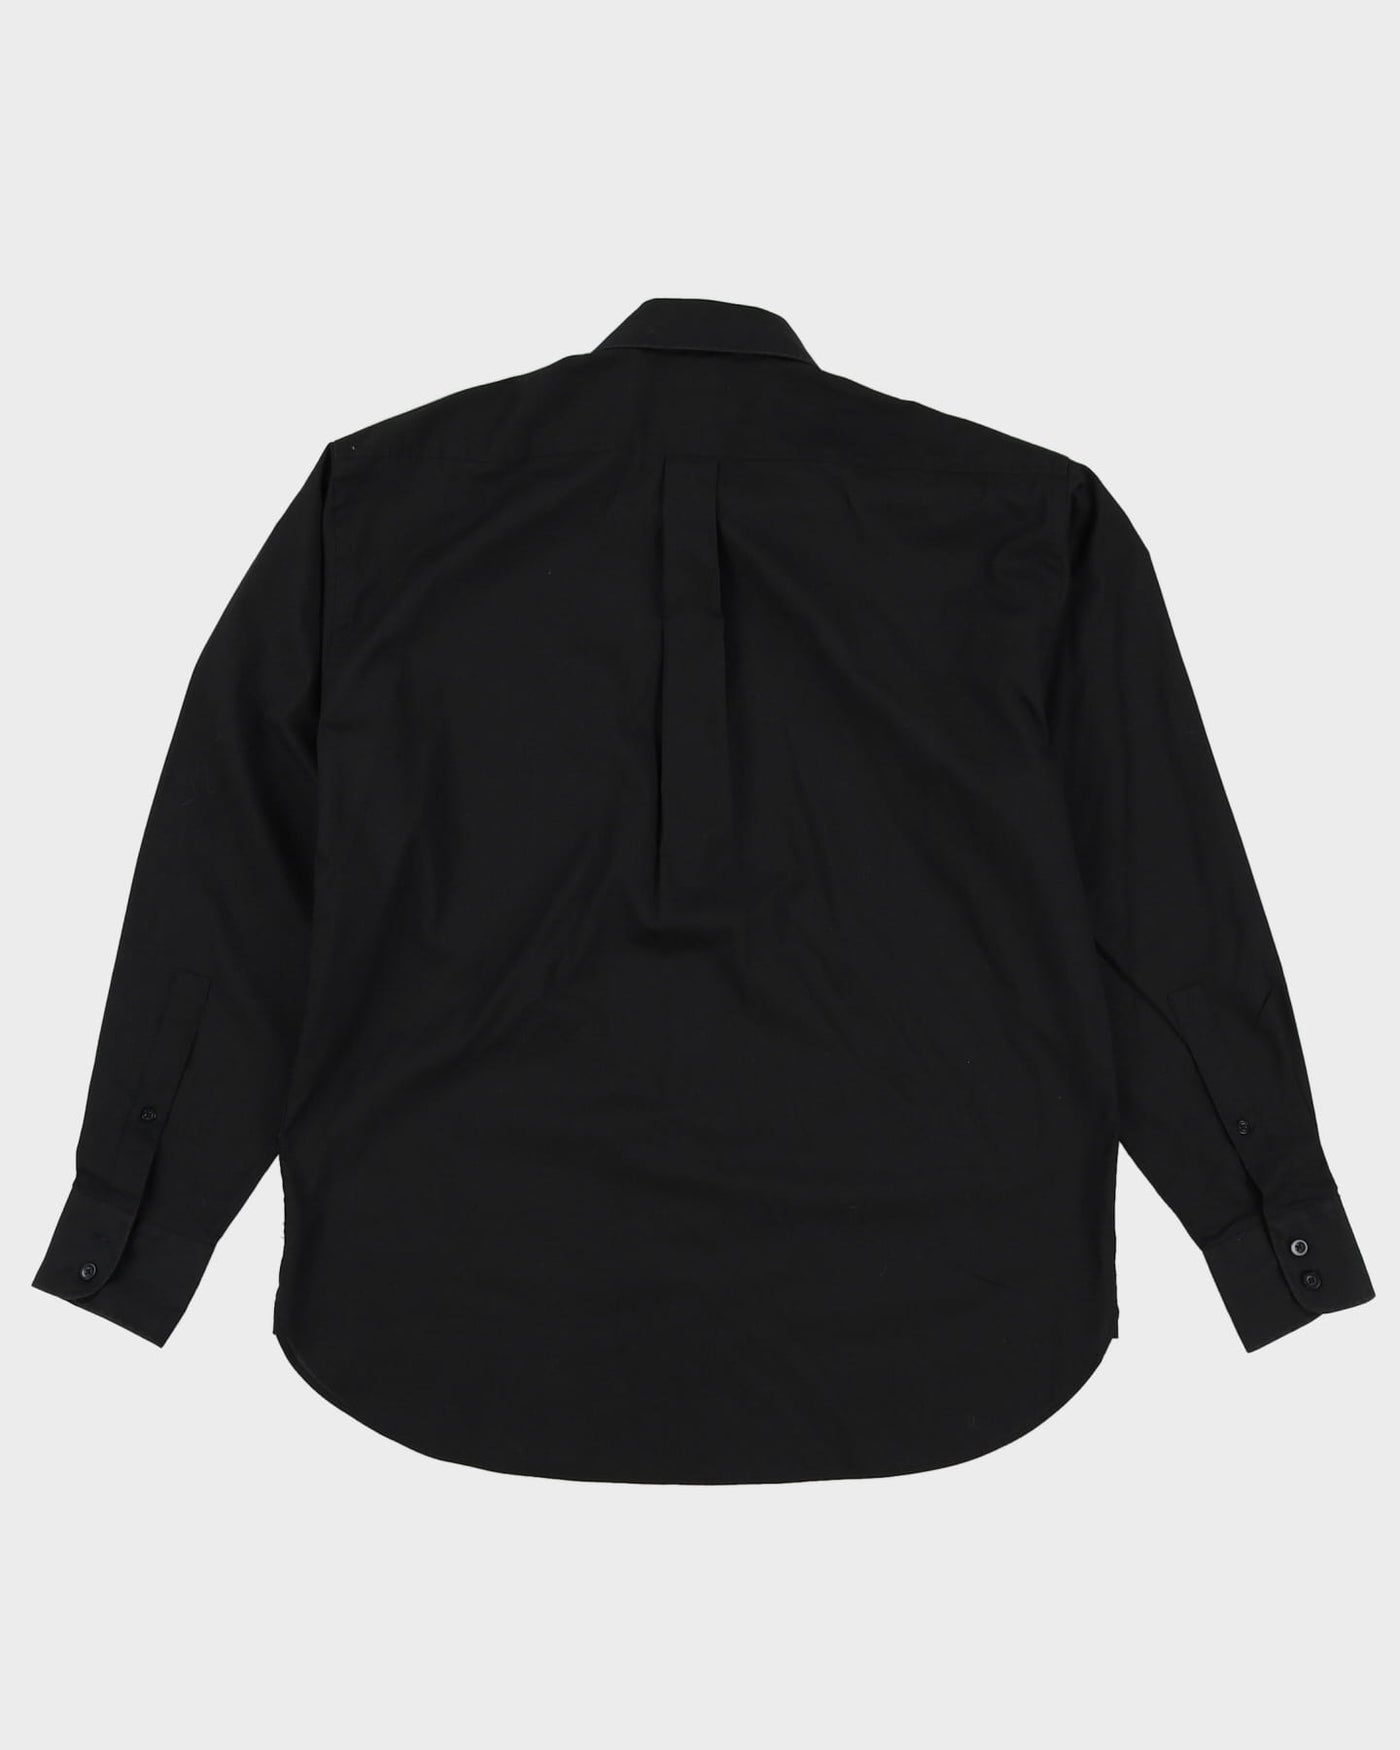 90s YSL Yves Saint Laurent Black Long-Sleeve Button Up Shirt - L / XL